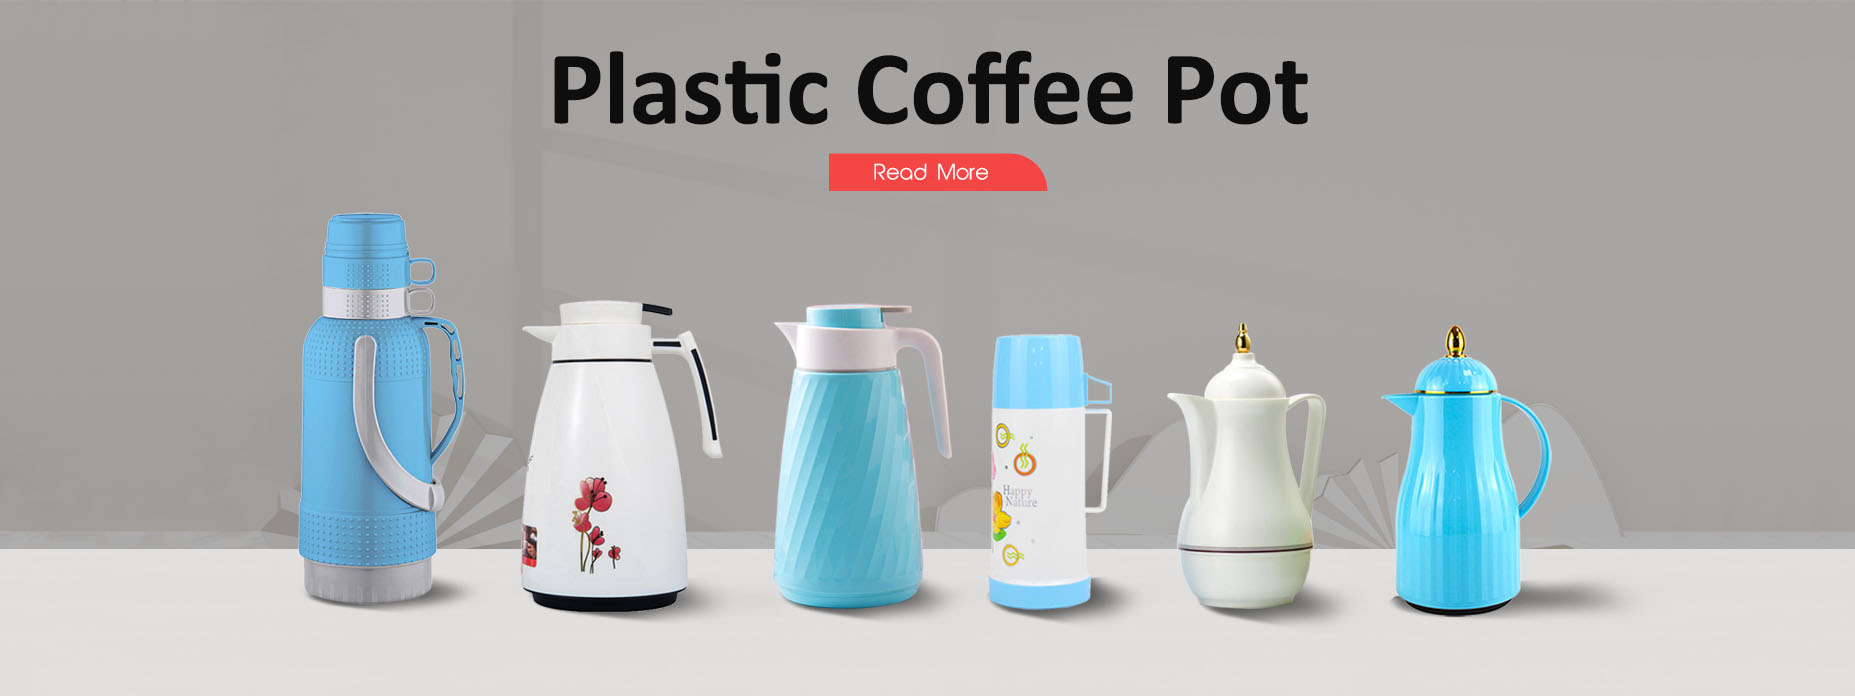 Plastic coffee pot